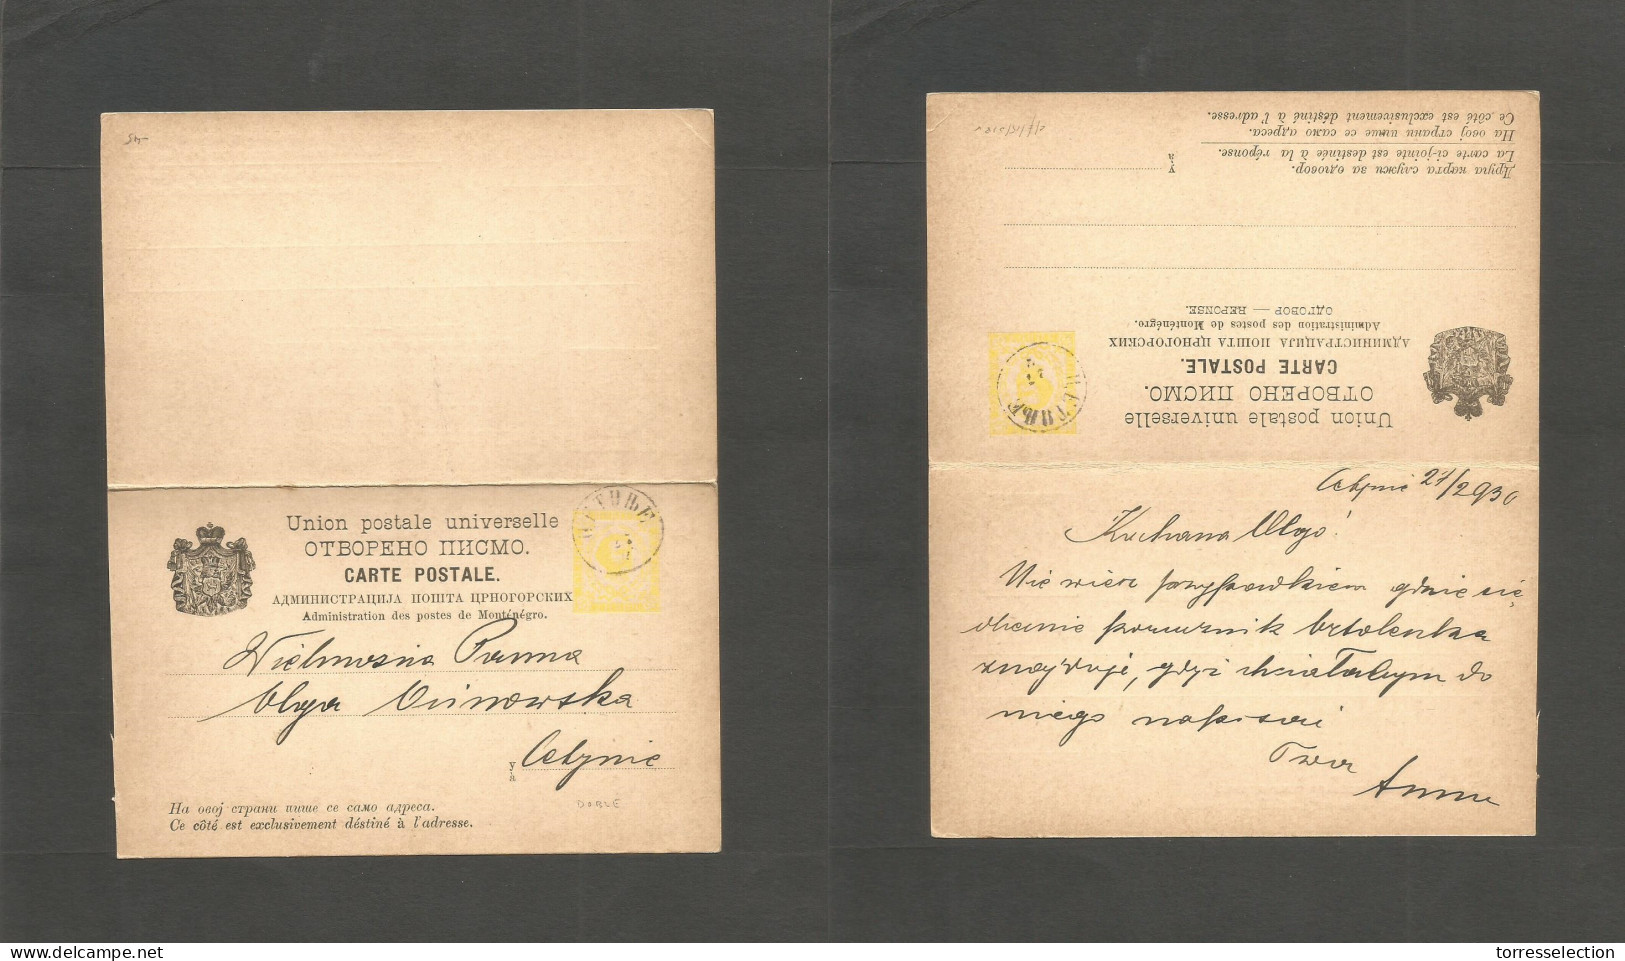 MONTENEGRO. 1893 (27 Feb) Cebyne. Doble Yellow Card Stationary. Proper Message Used One Way. Very Scarce. - Montenegro